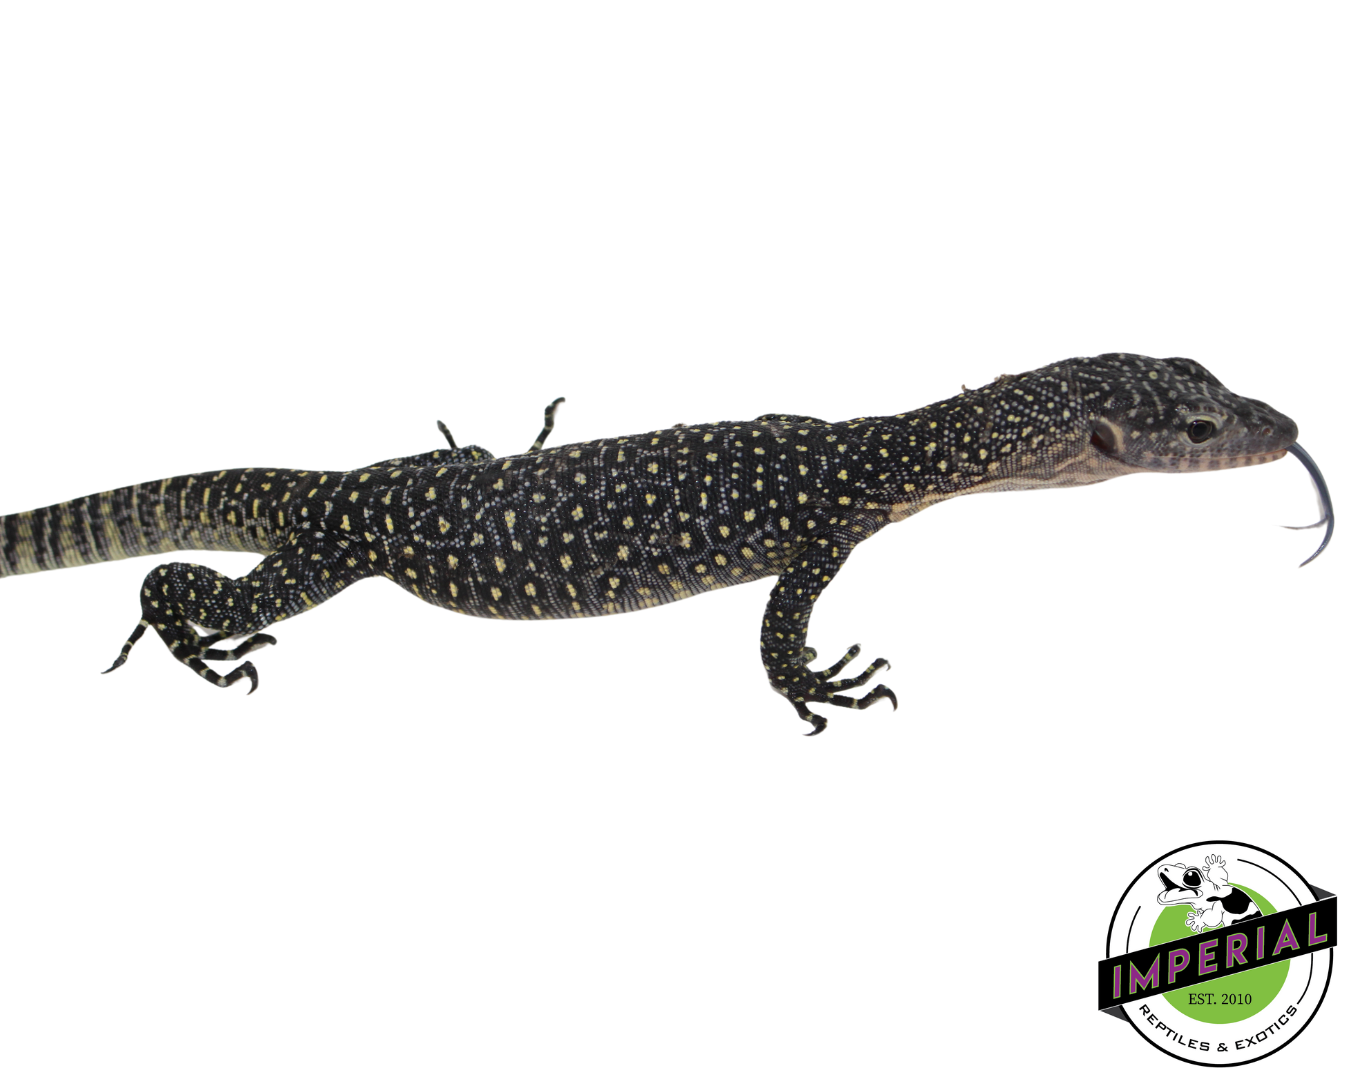 sorong mangrove monitor lizard for sale, buy reptiles online